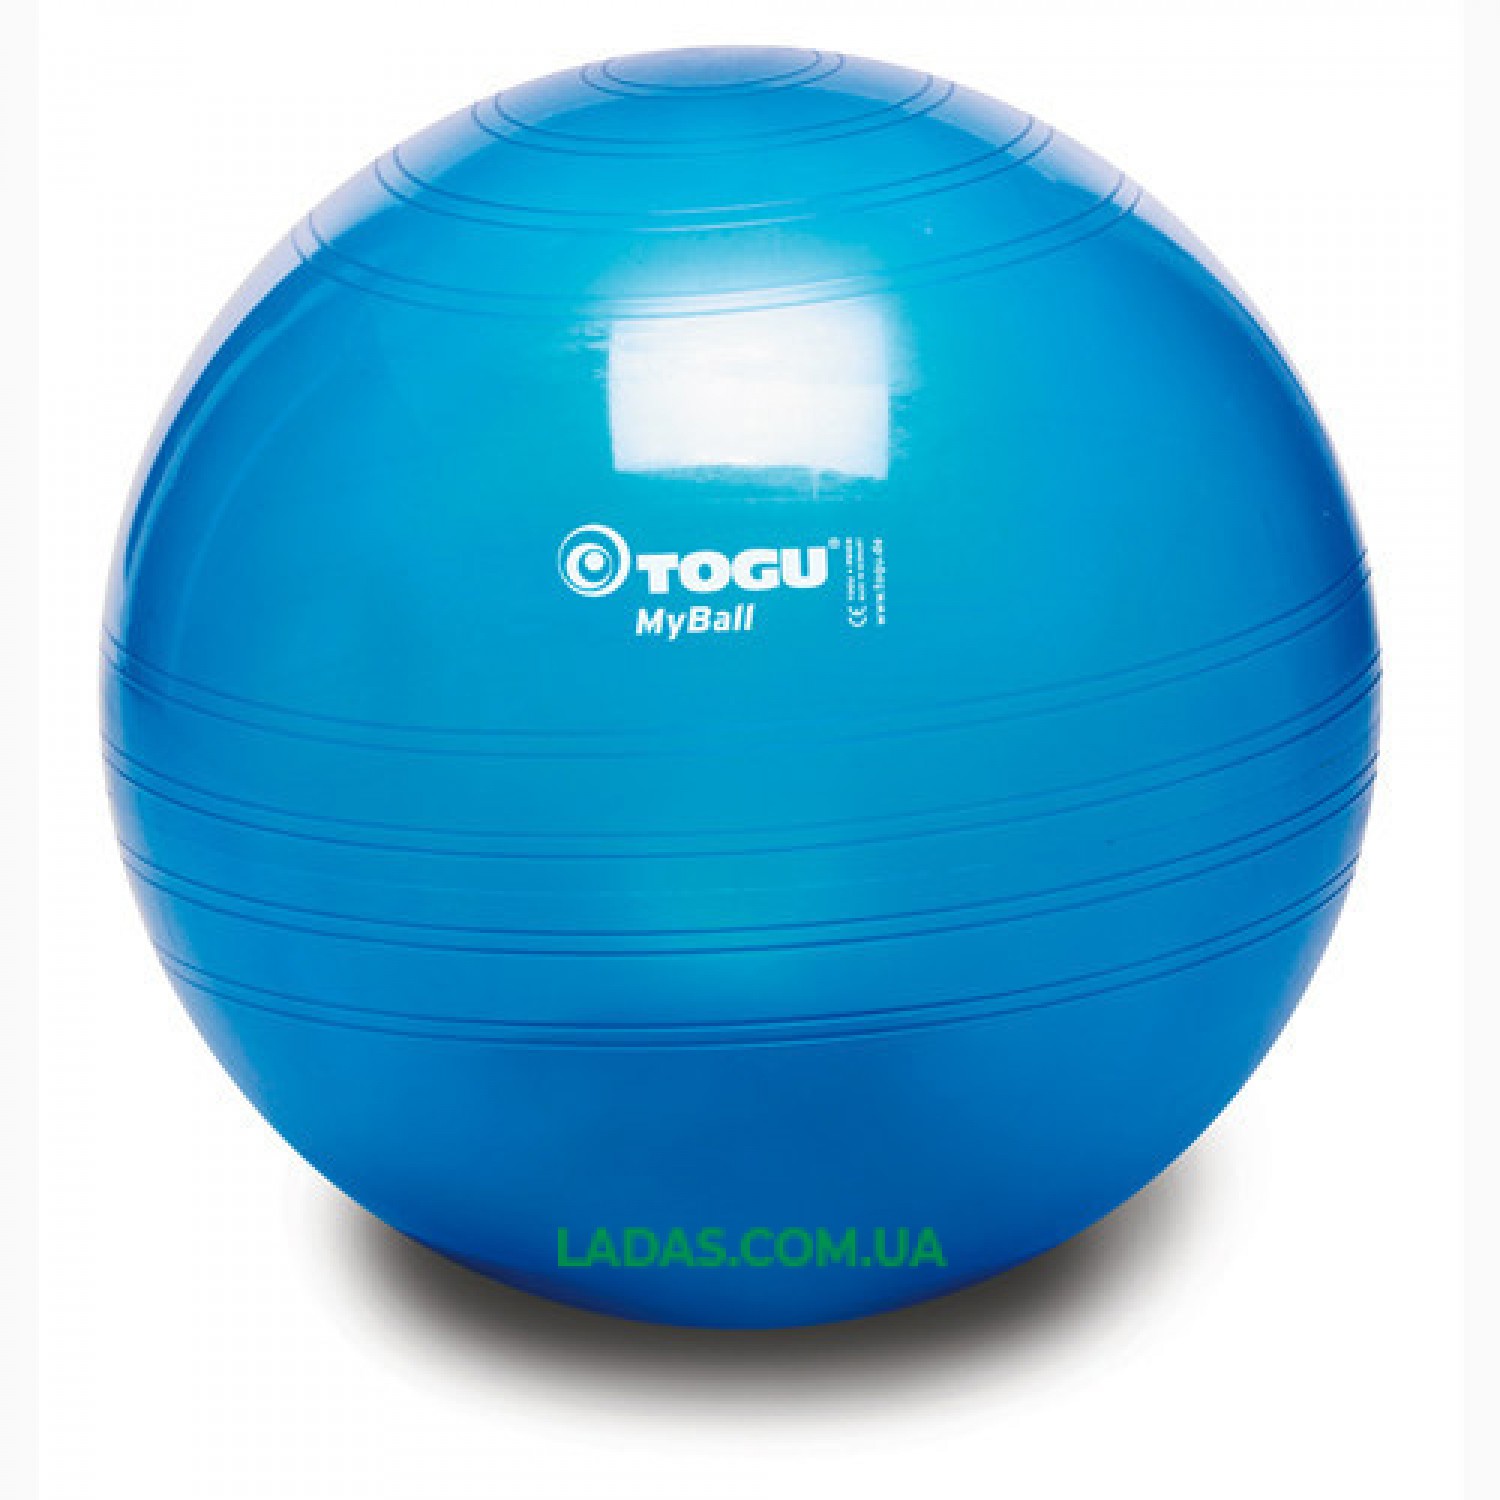 Мяч фитнес TOGU 55 см, MyBall, синий (Blue Transparent)